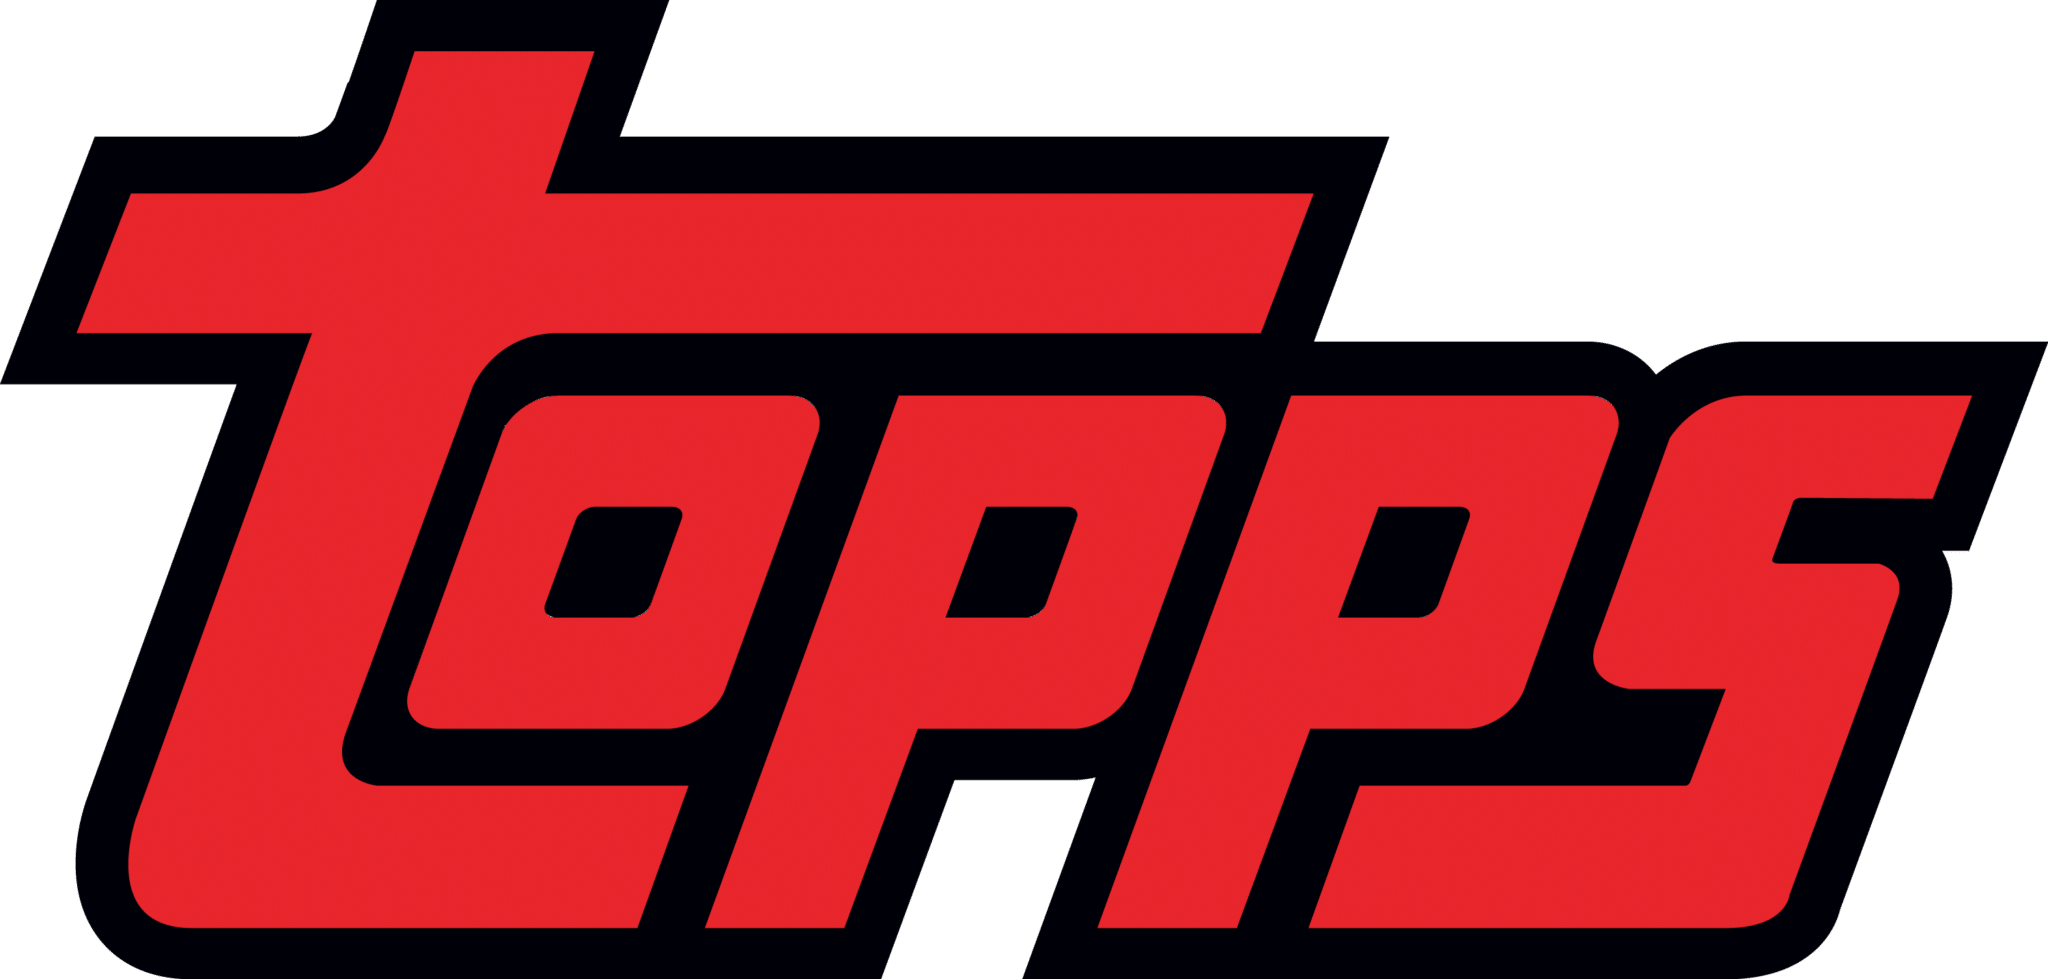 Tops Logo